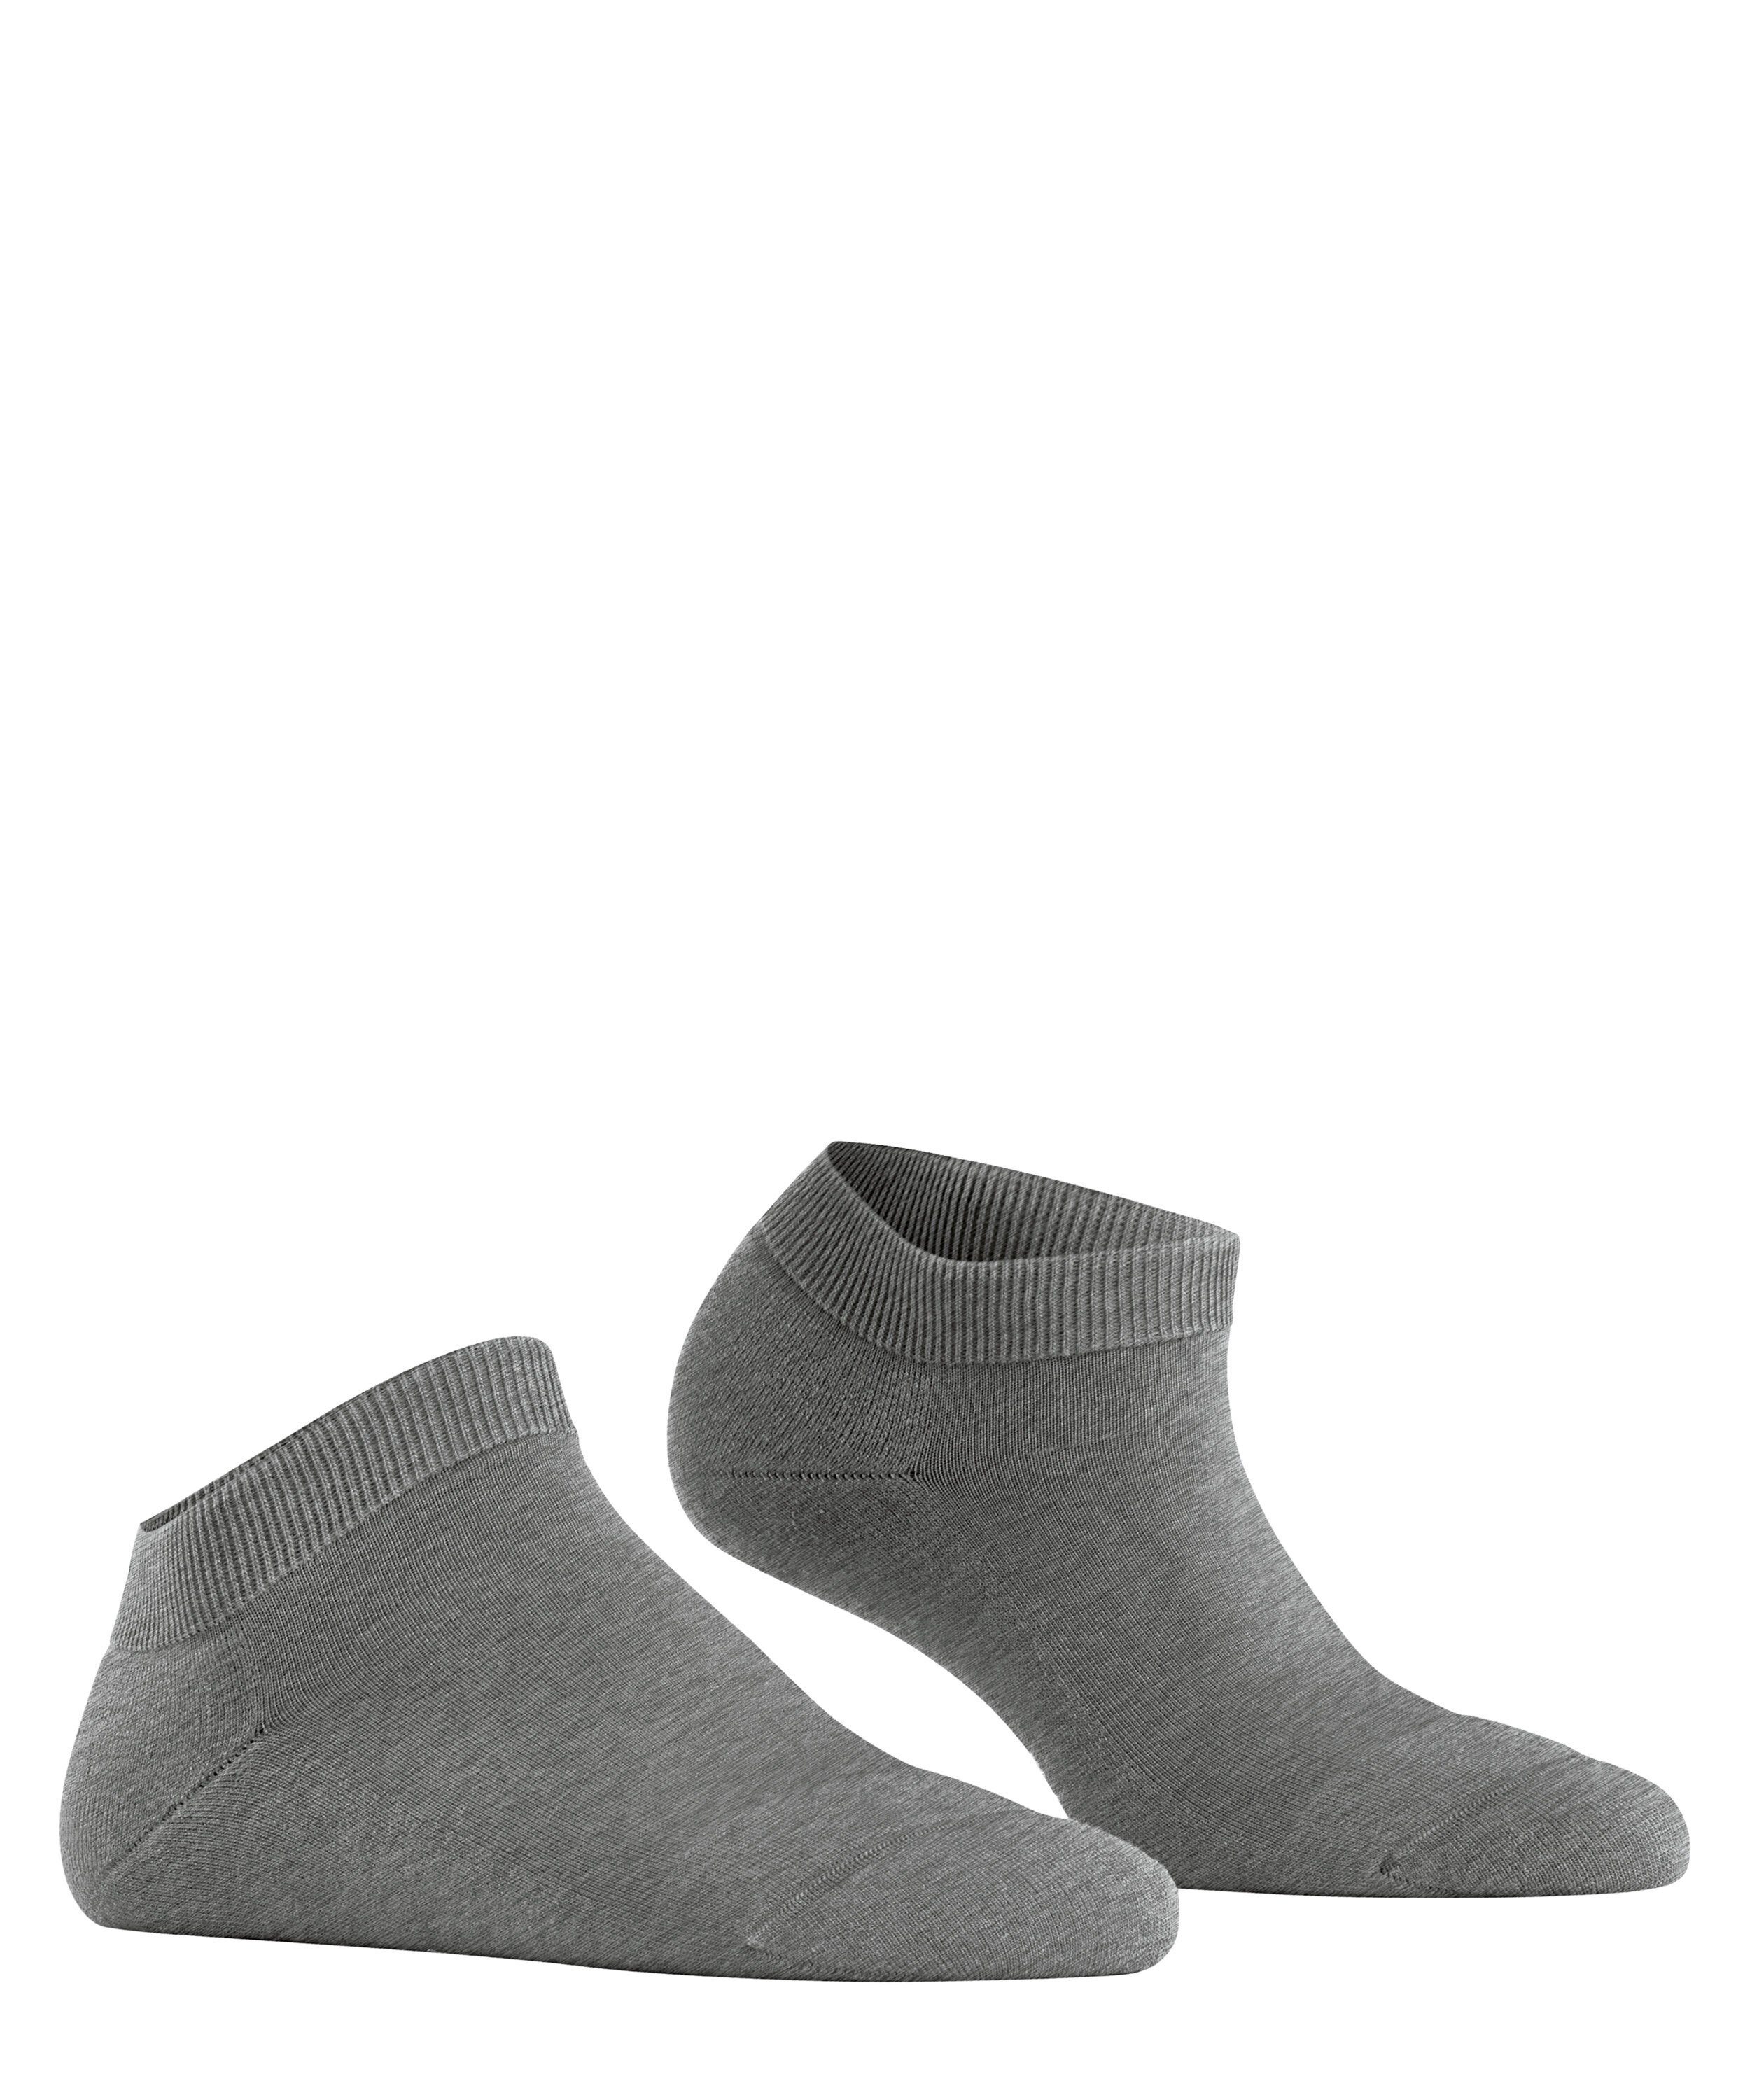 Wolle-Lyocell FALKE (3216) greymel. aus light (1-Paar) ClimaWool Sneakersocken klimaregulierender Mischung